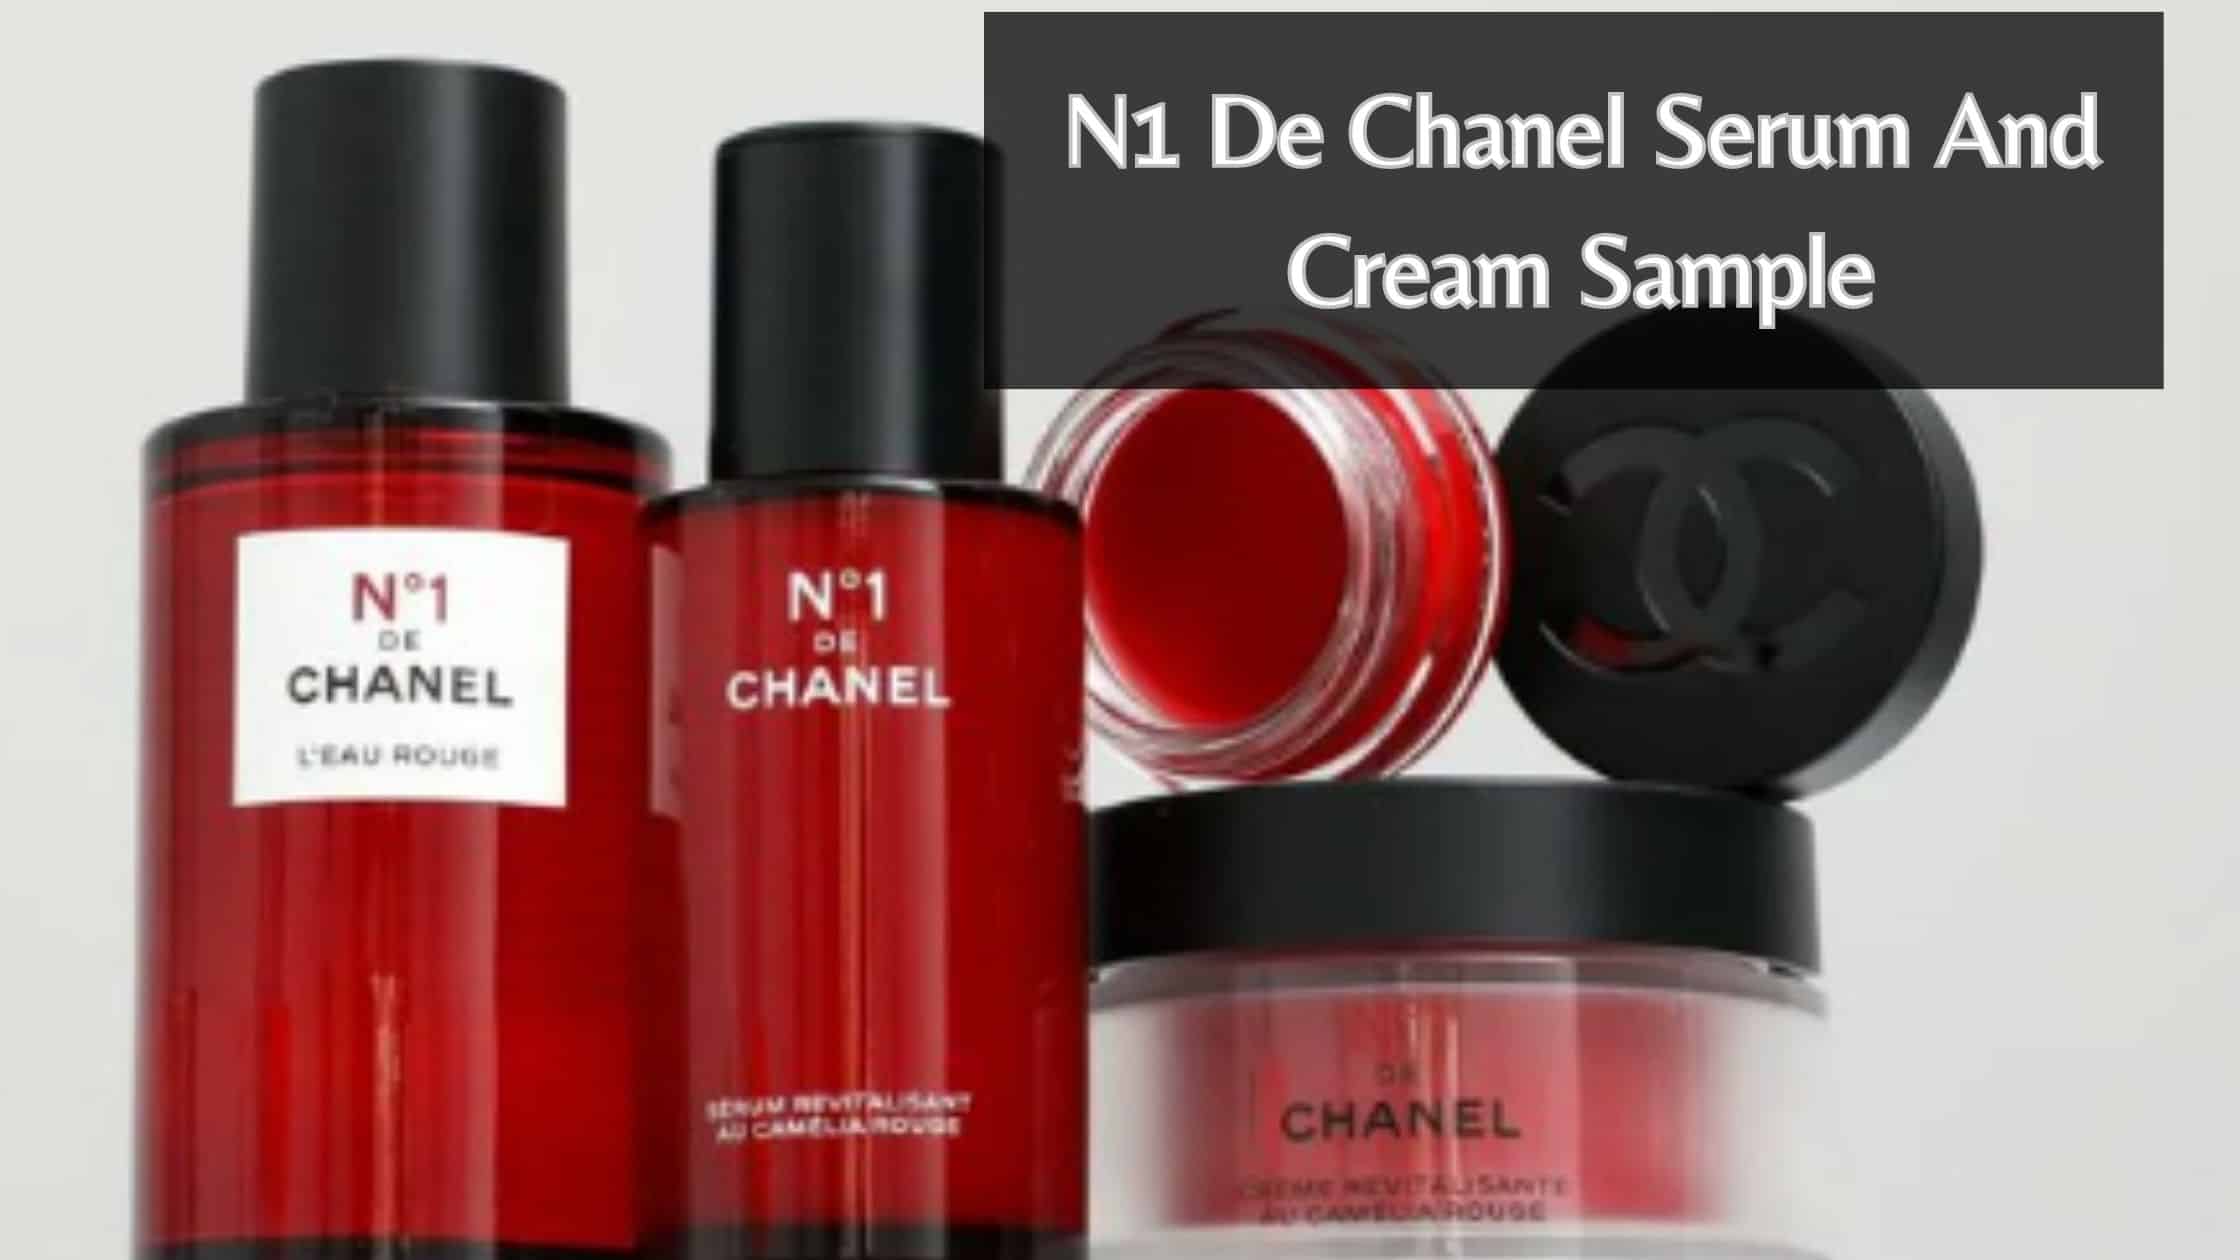 N1 De Chanel Serum And Cream Sample